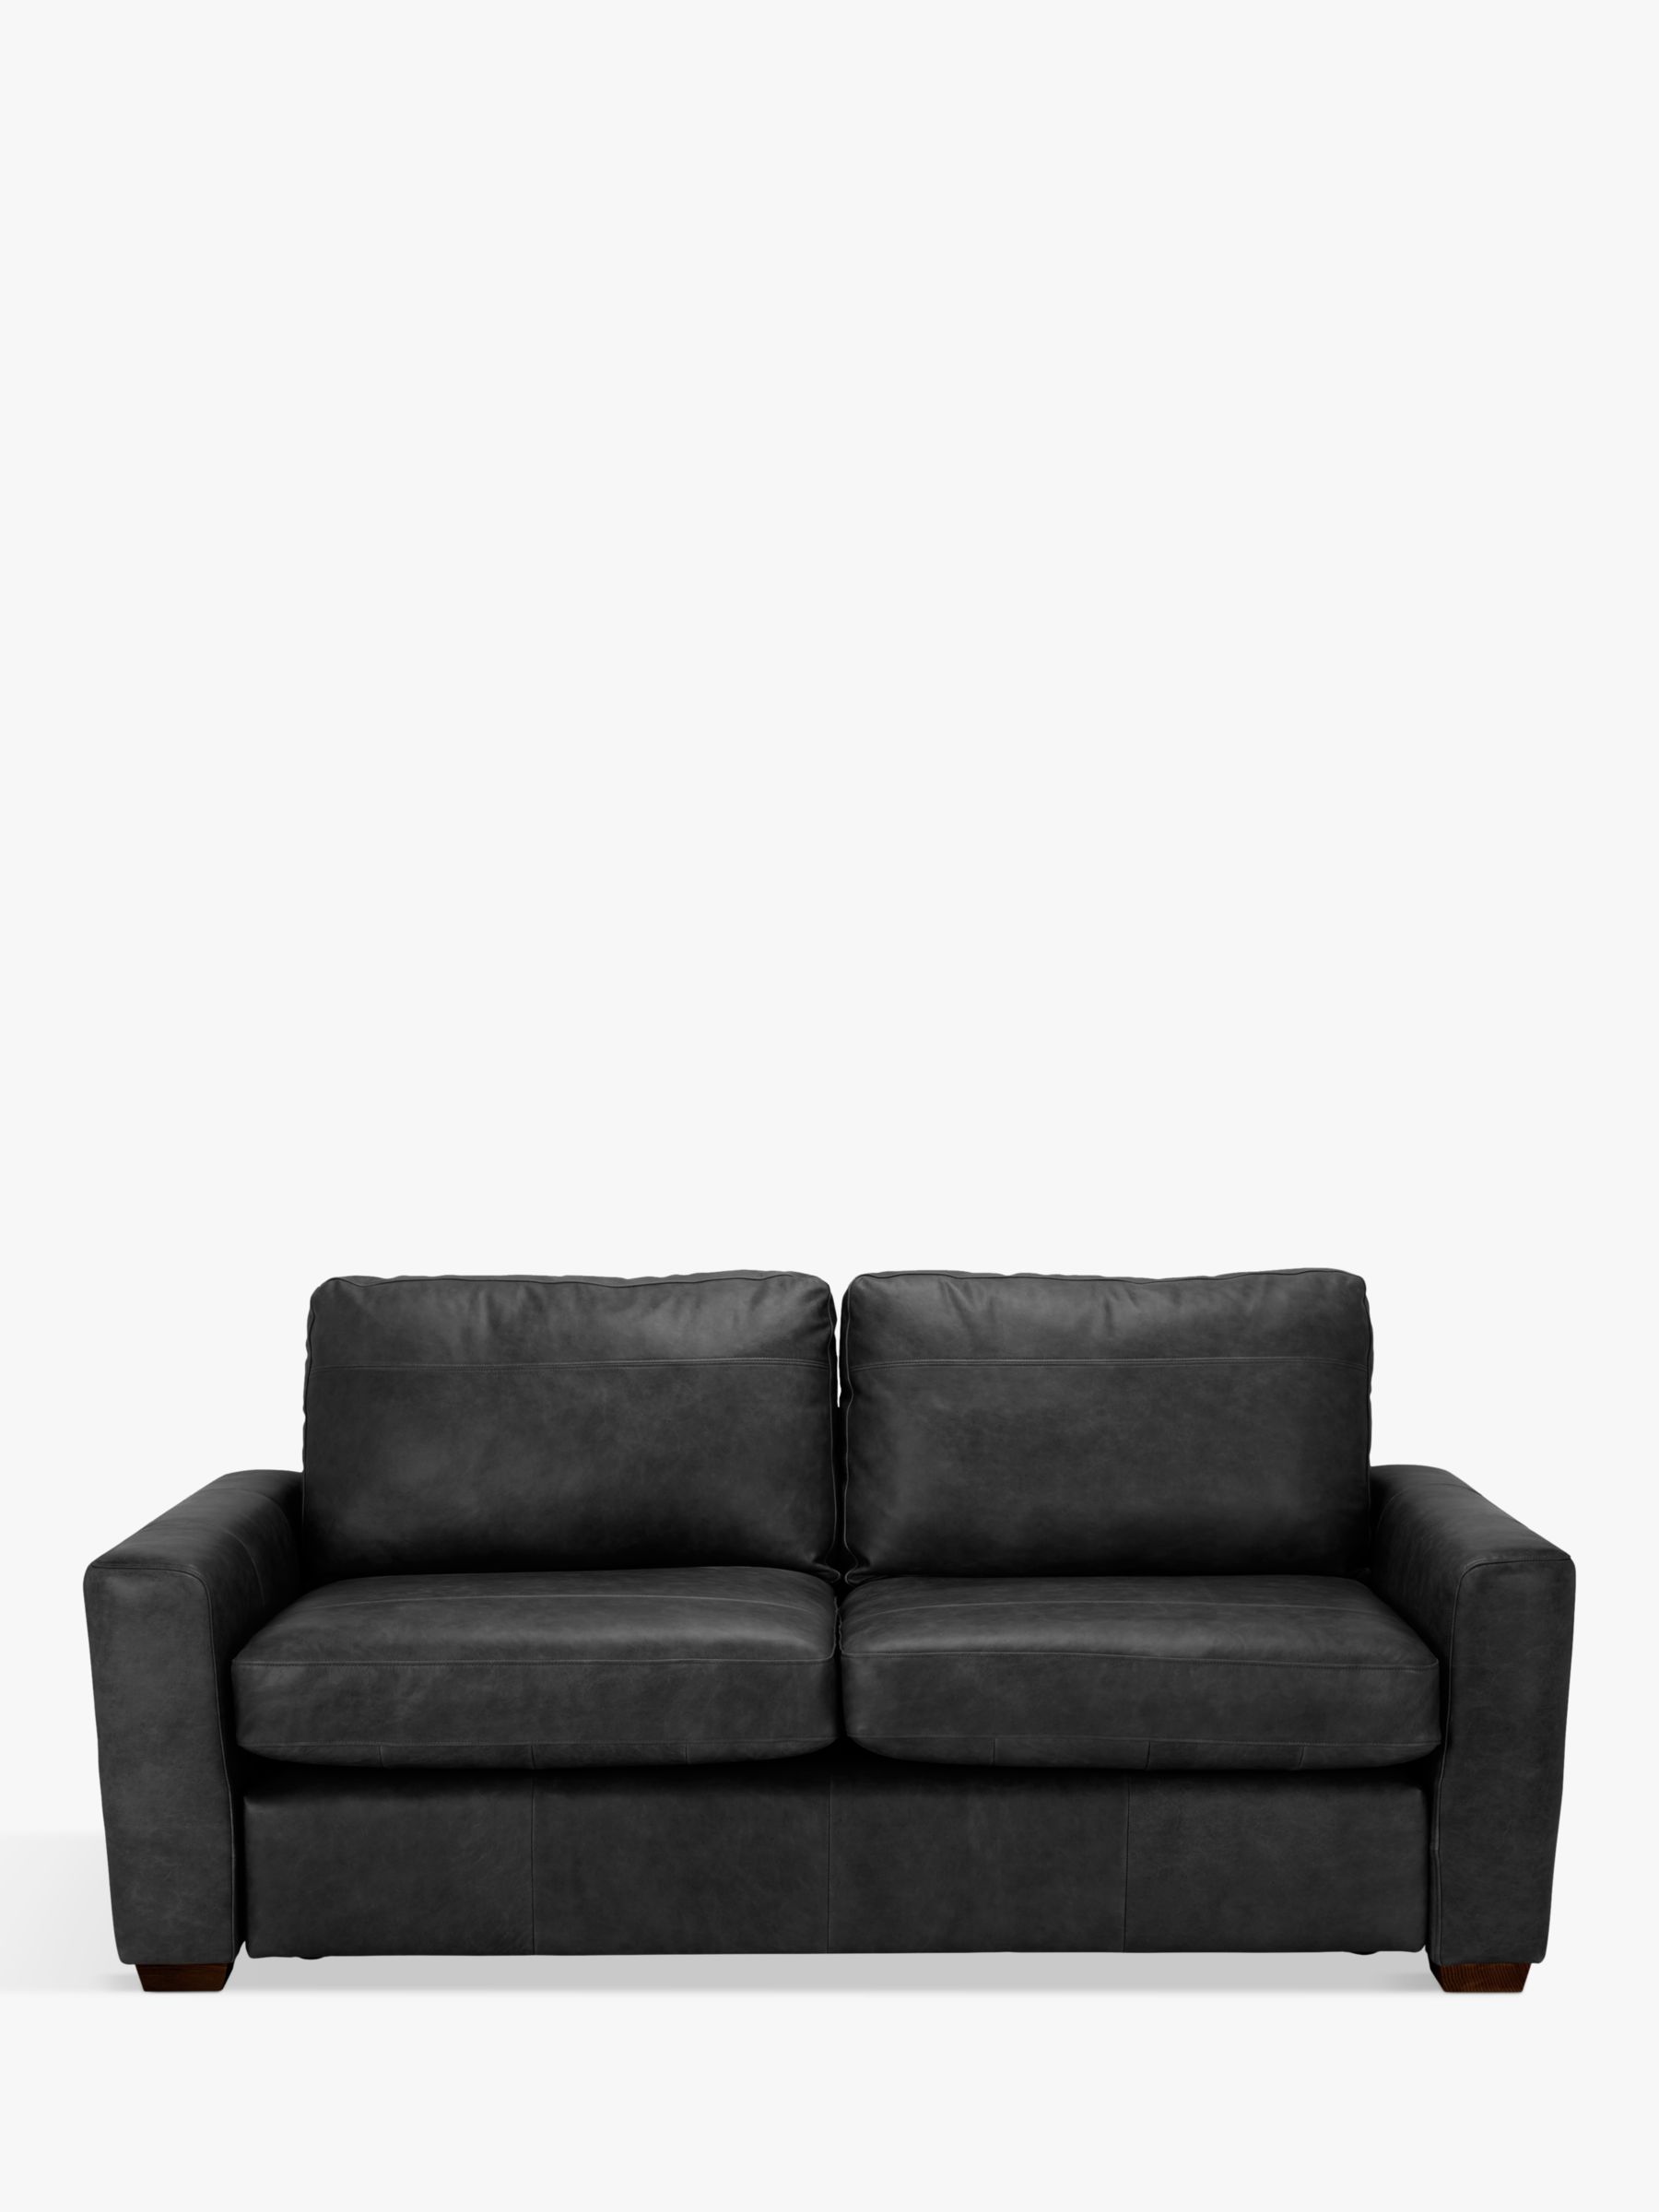 Oliver Range, John Lewis Oliver Large 3 Seater Leather Sofa, Dark Leg, Contempo Black